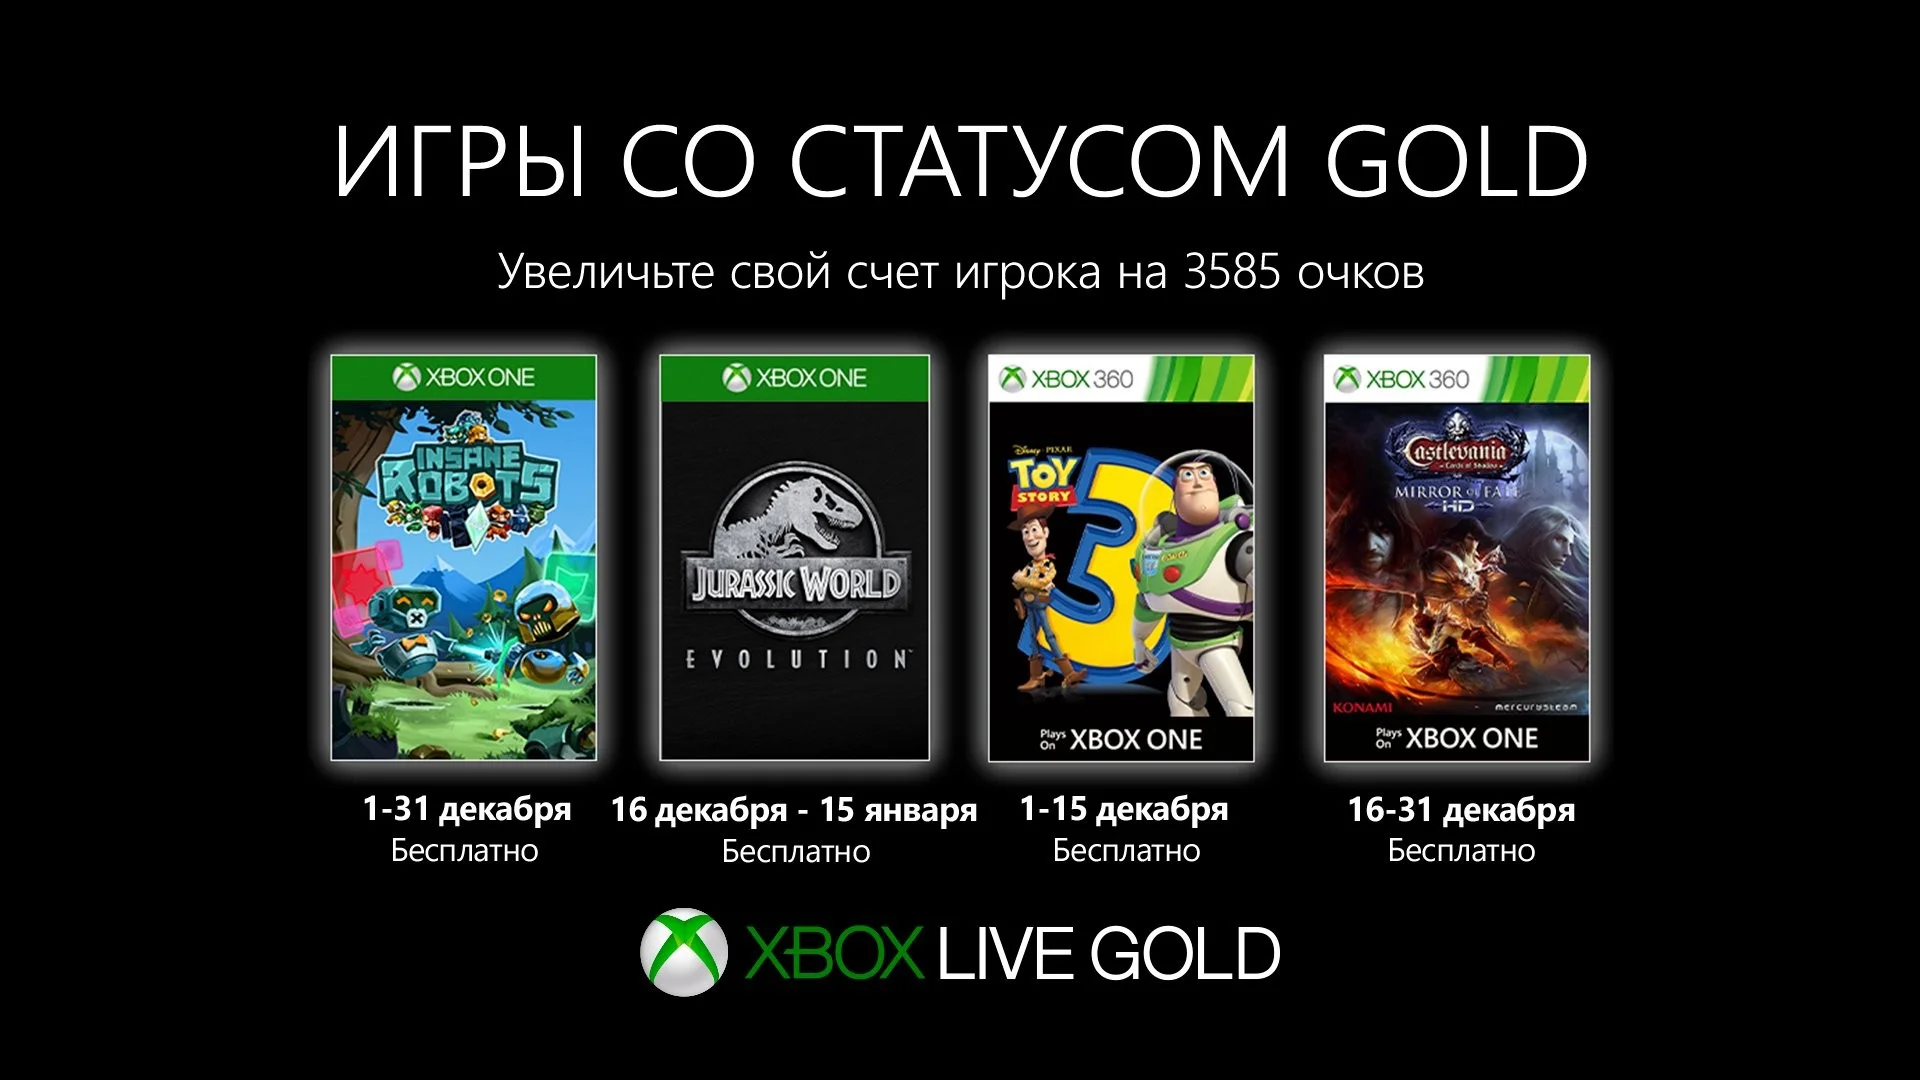 В декабре подписчики Xbox Live Gold получат Jurassic World Evolution и Toy Story 3 - фото 1